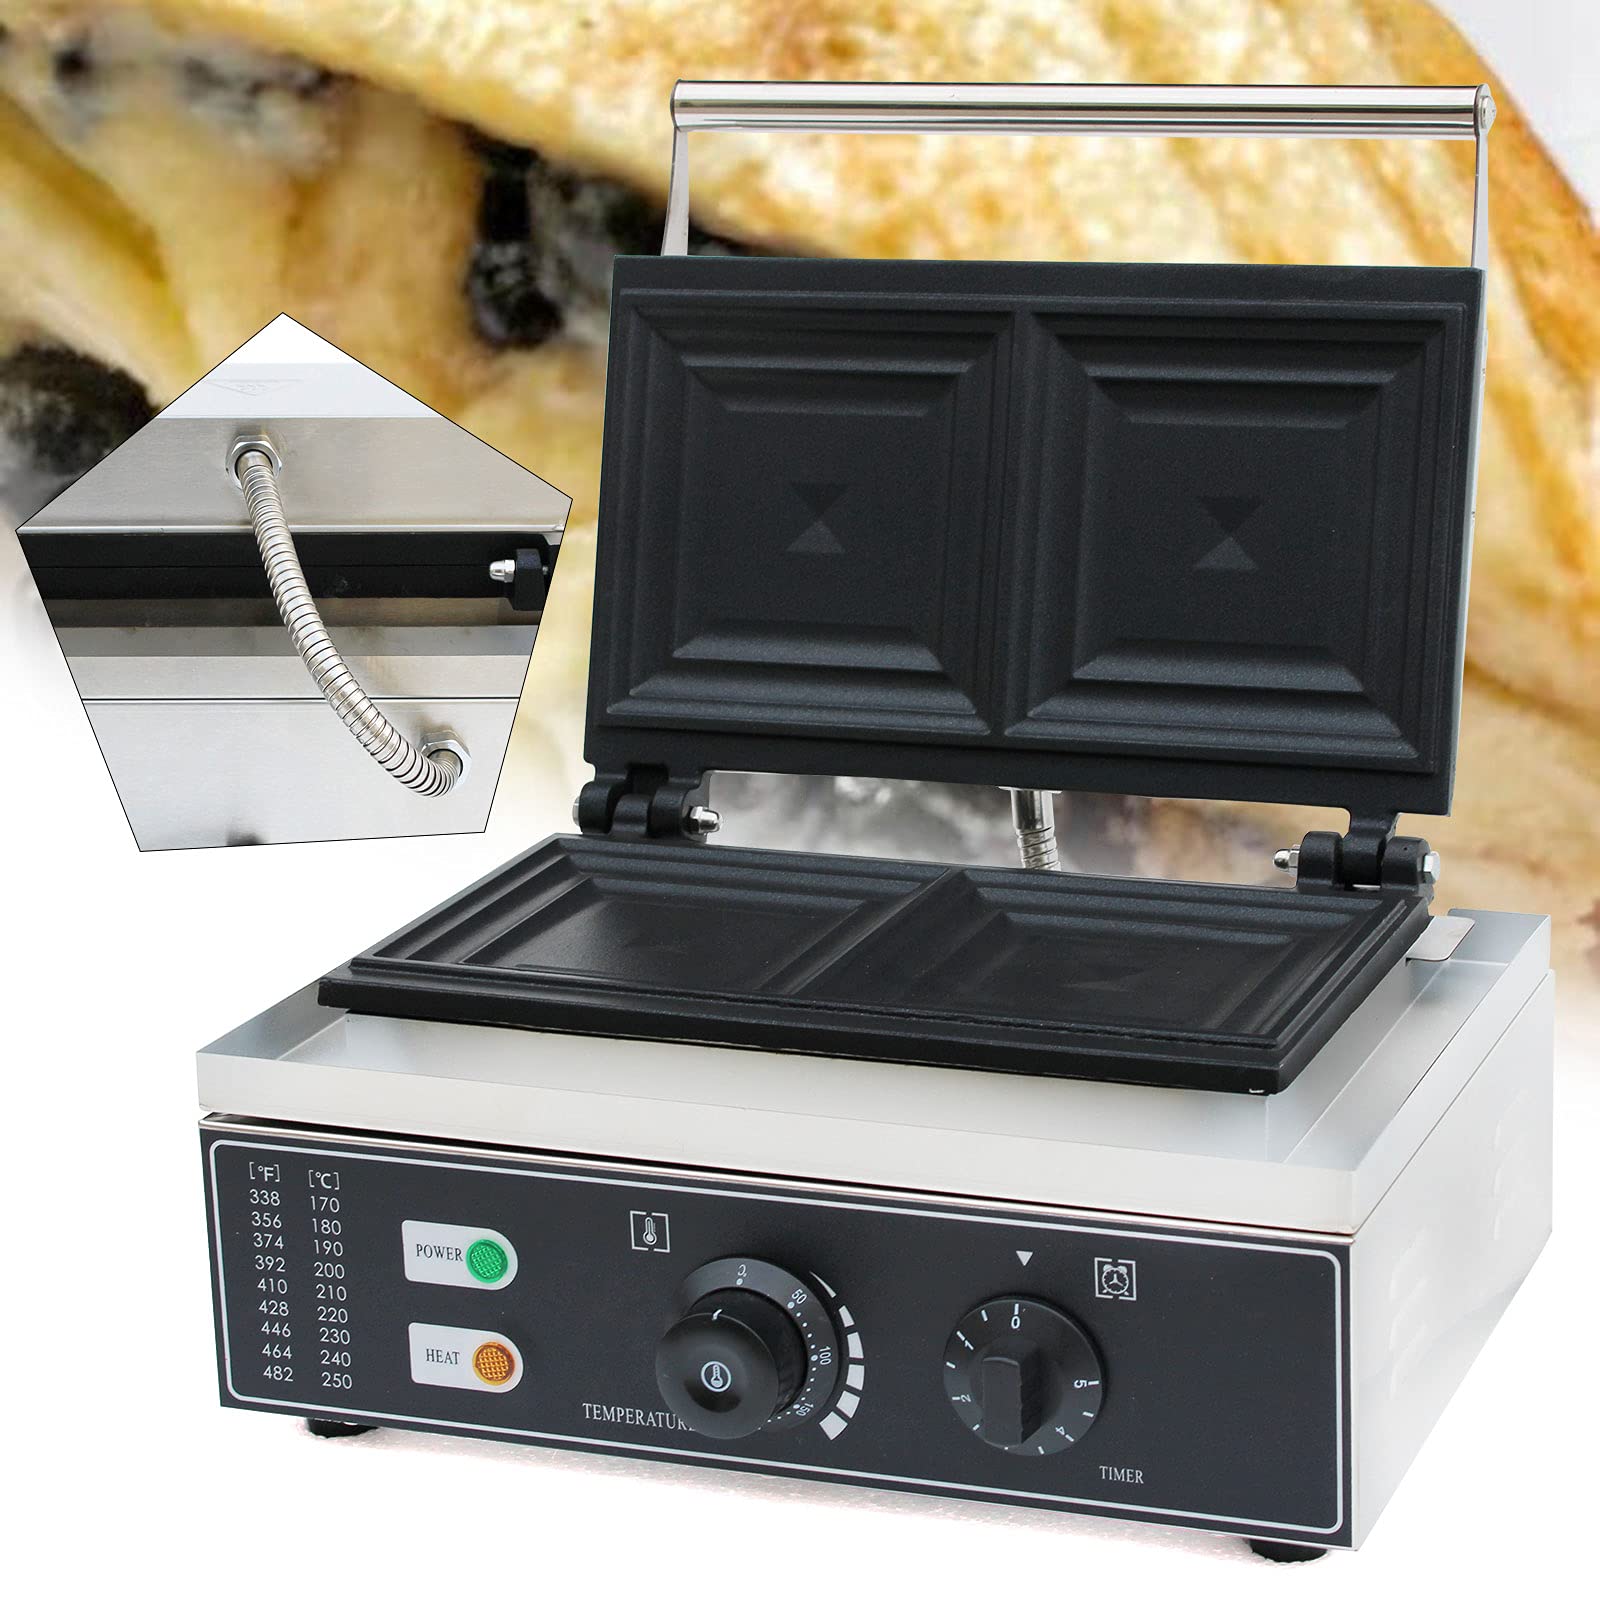 CNCEST Commercial Sandwich Machine, 1500W Electric Sandwich Press Grill Oven, 2-Slice Sandwich Maker Bread Toaster